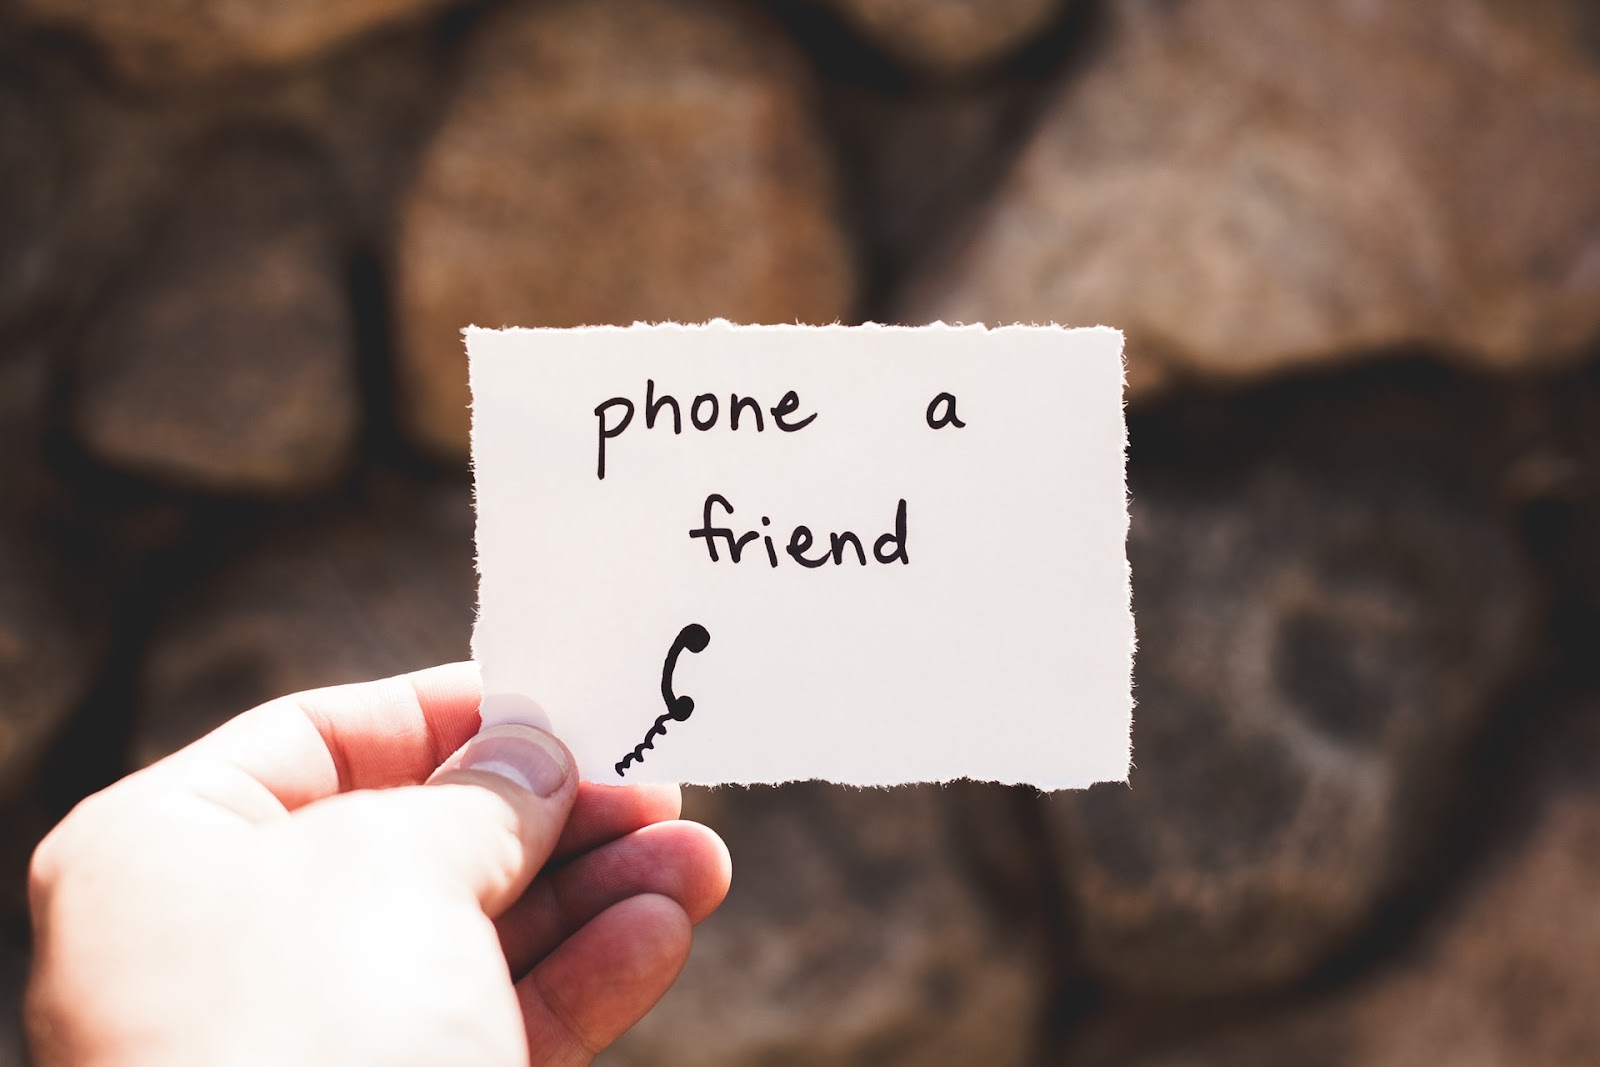 telefon un prieten